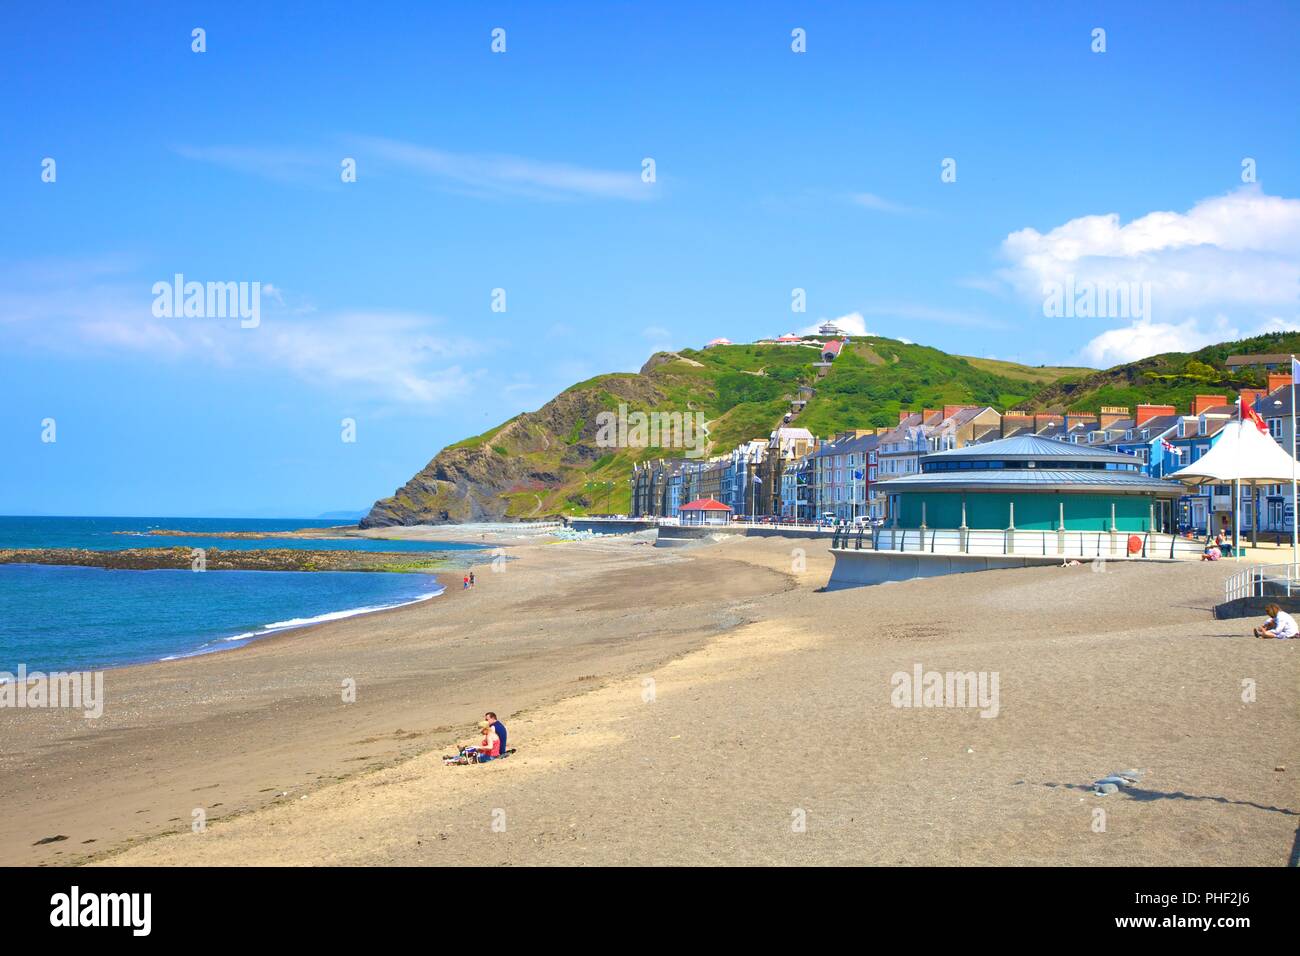 The Beach and Promenade at Aberystwyth, Cardigan Bay, Wales, United Kingdom, Europe, Stock Photo